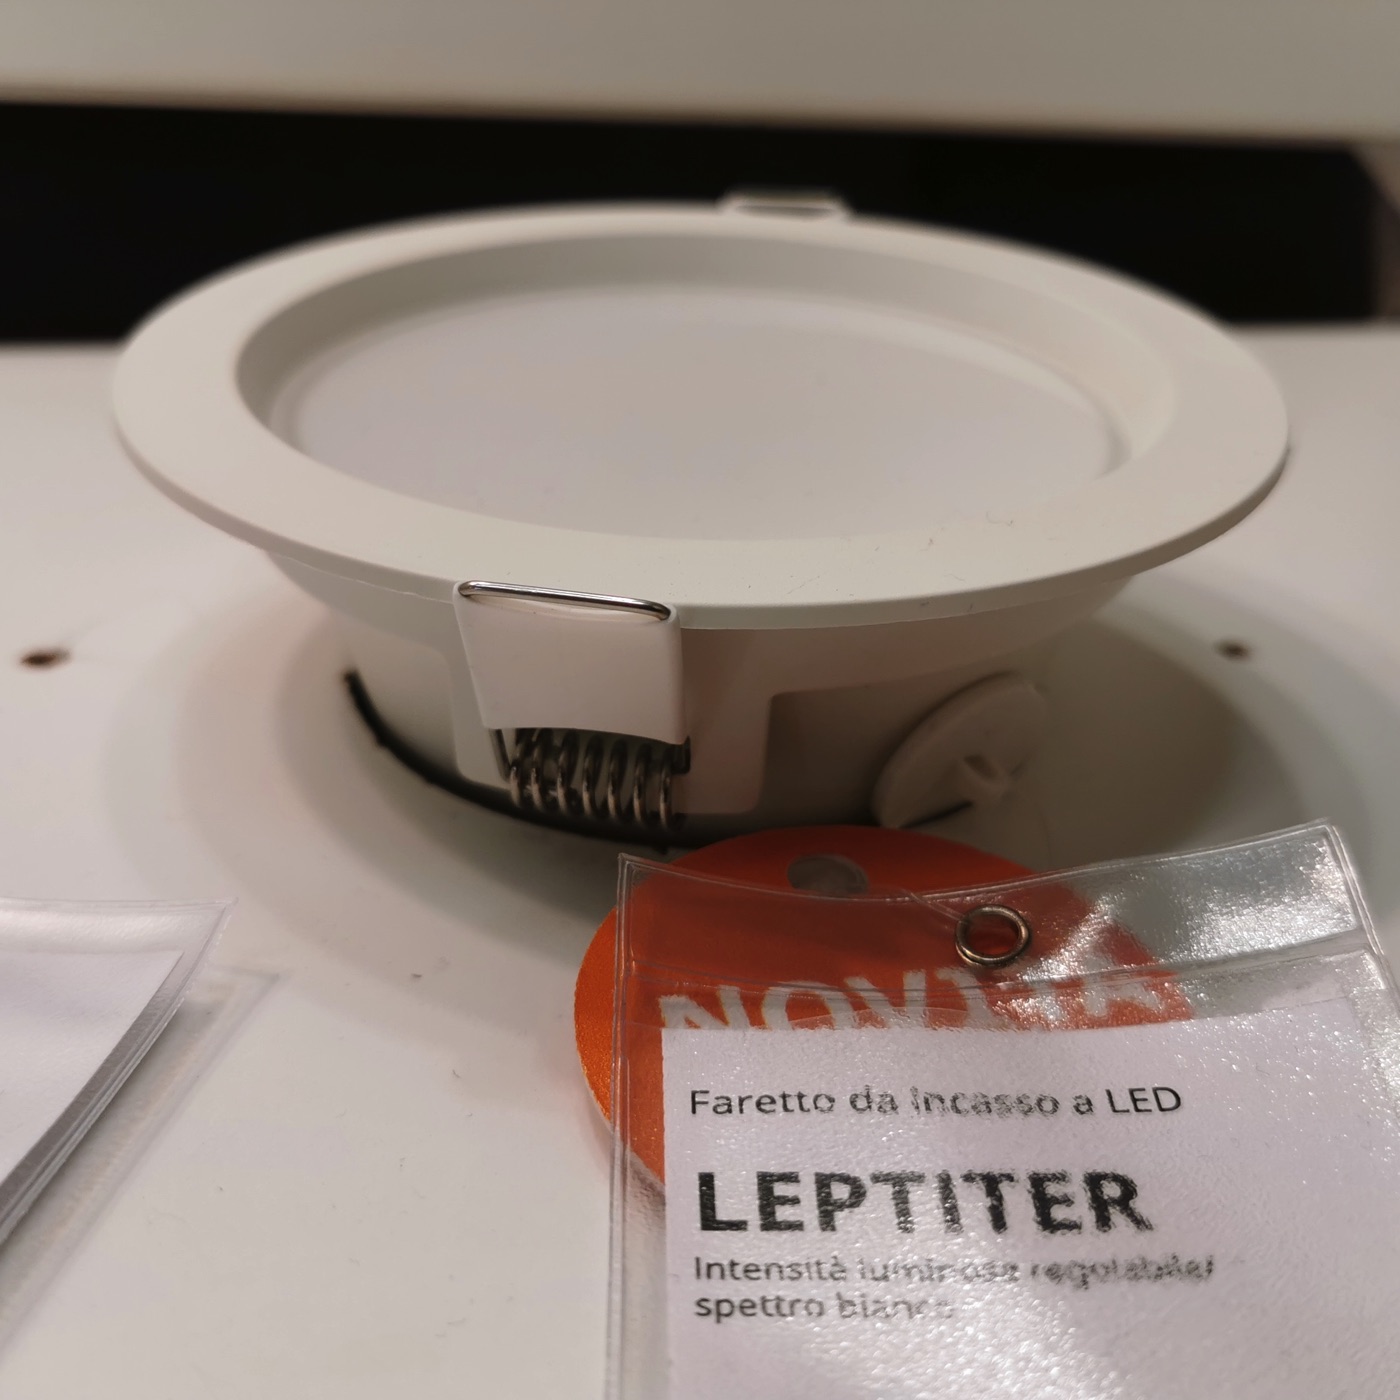 Leptiter è il nuovo da incasso Zigbee compatibile Homekit, Alexa e Assistente Google - macitynet.it